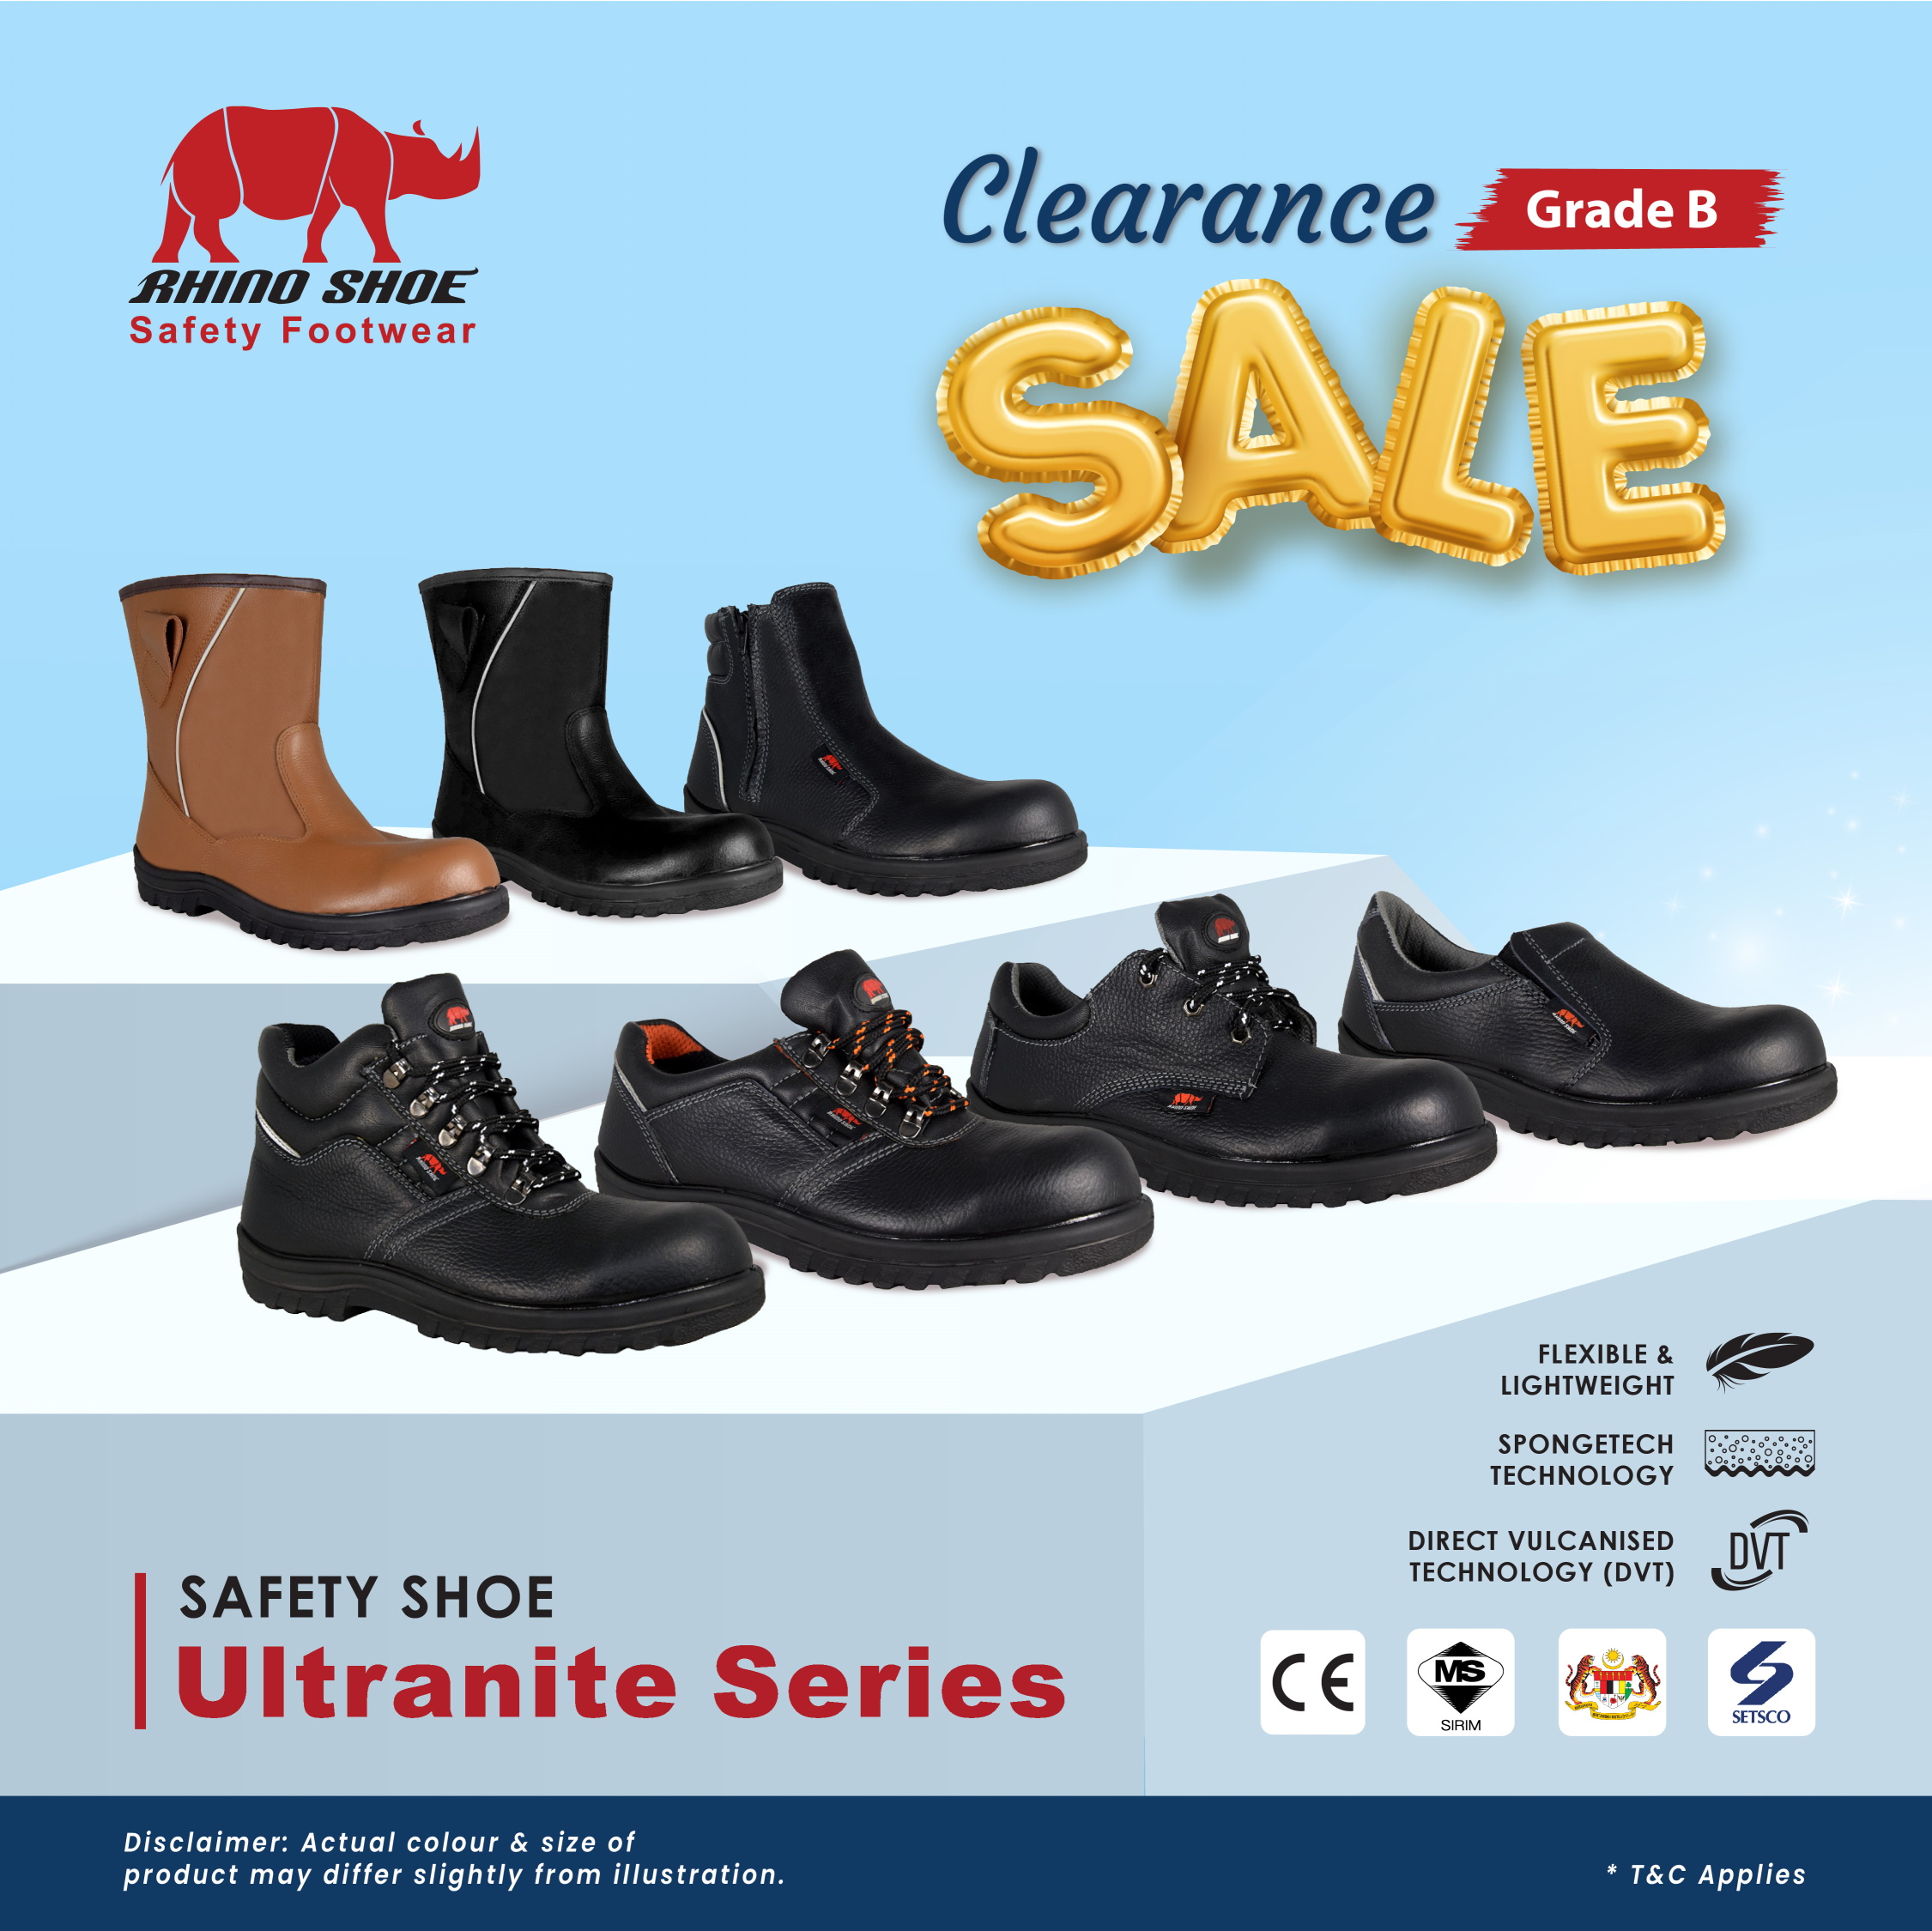 Rhino Shoe Grade B Clearance Sale